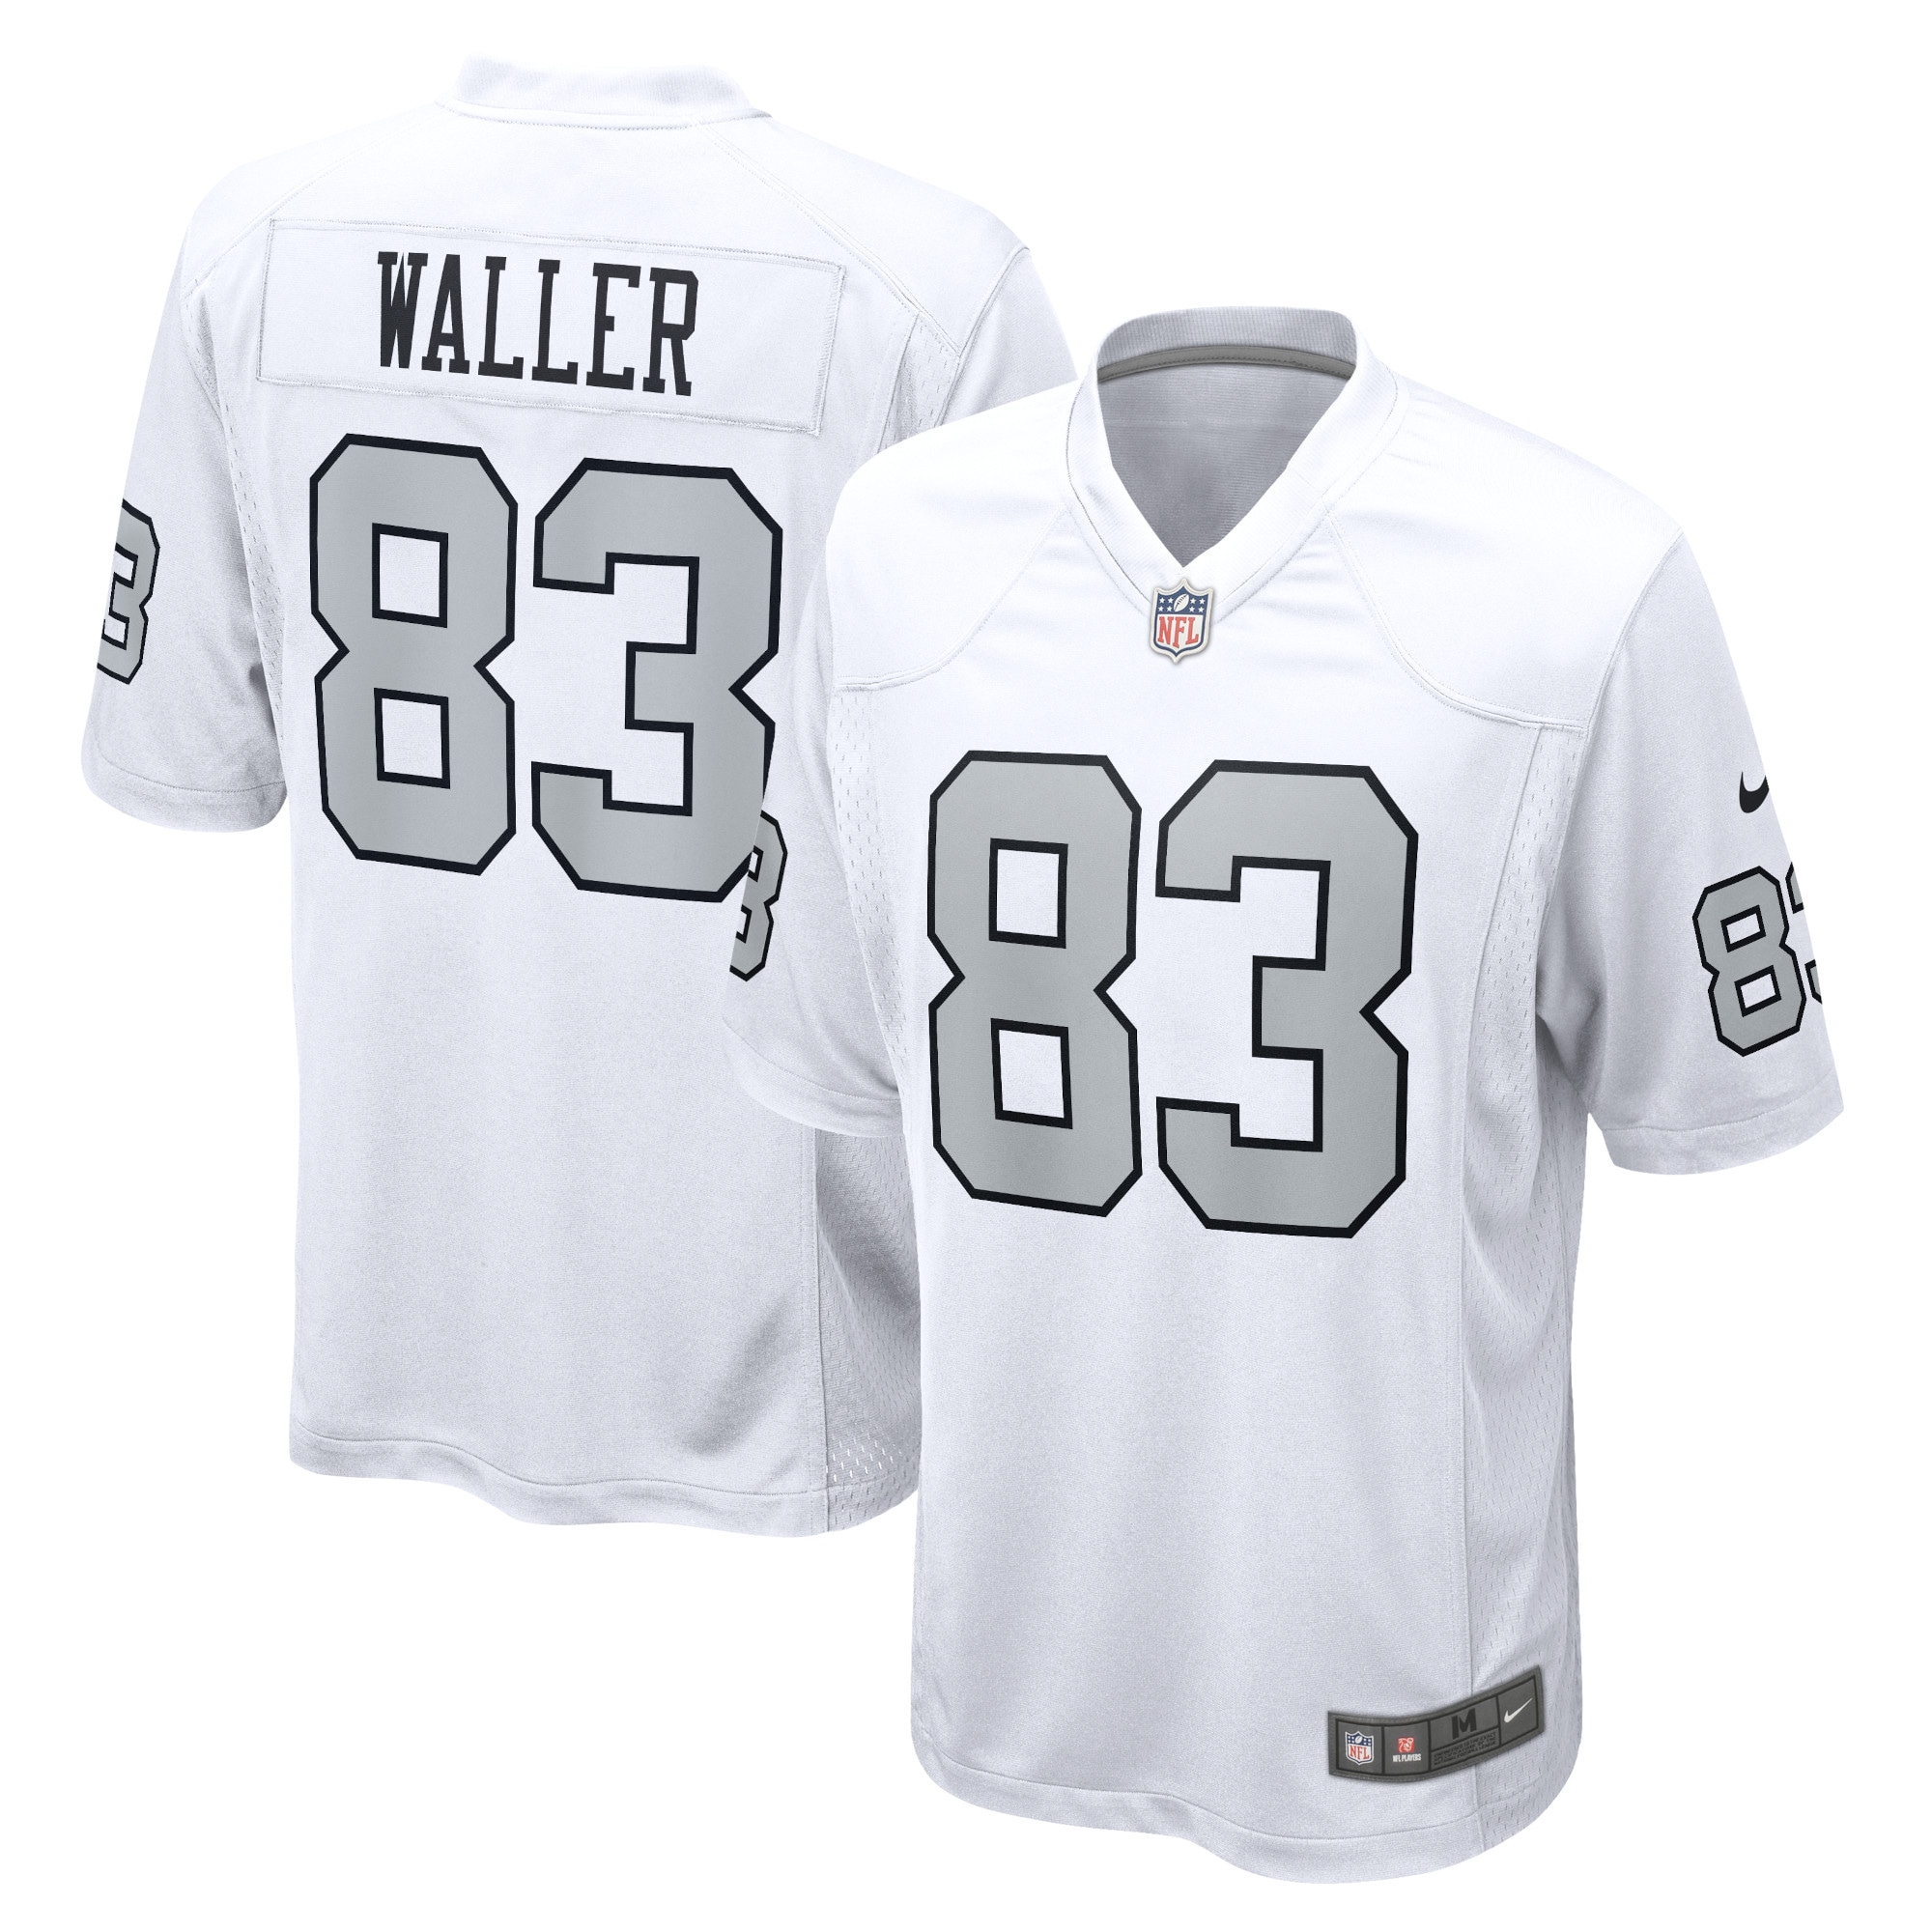 Men's Las Vegas Raiders Jerseys White Darren Waller Alternate Game Style